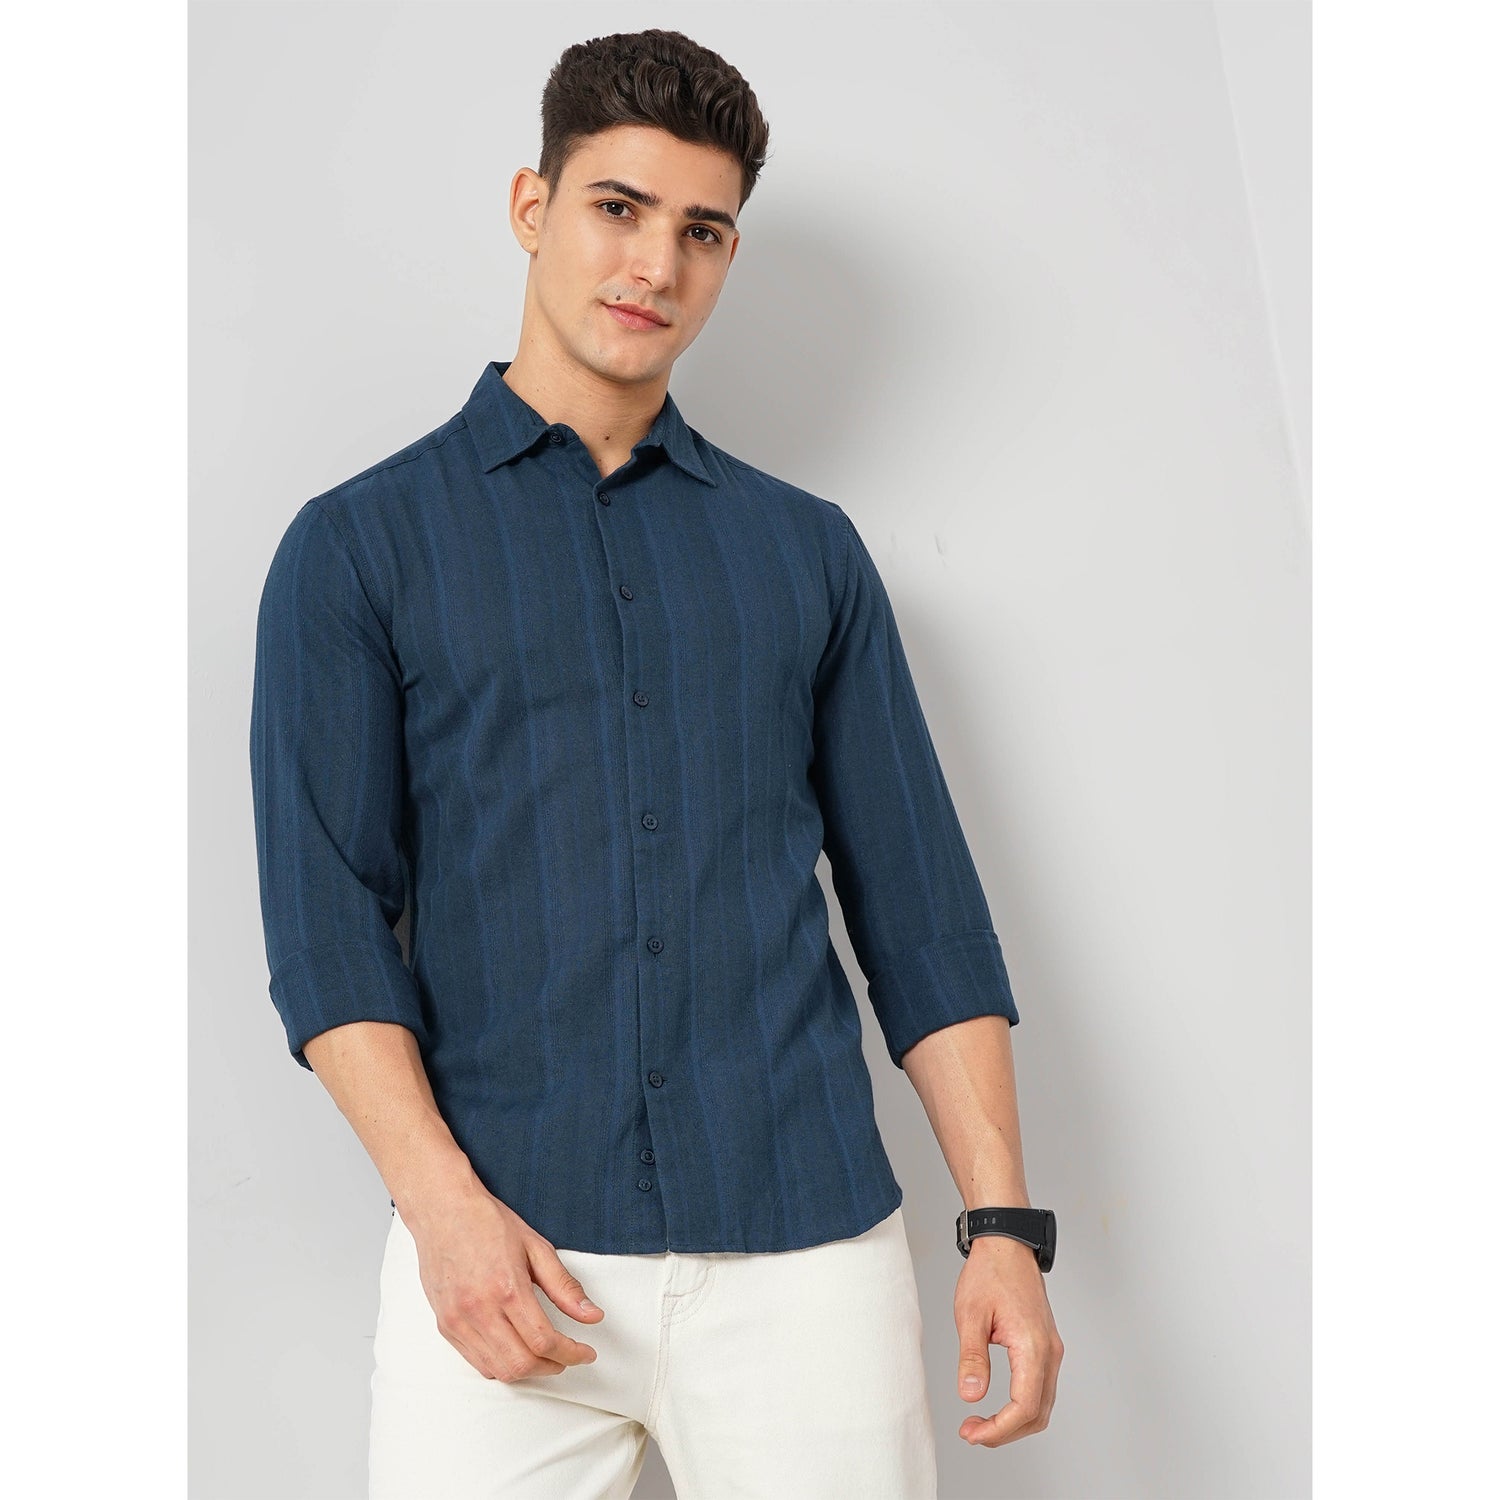 Self-Design Teal Cotton Shirt (FADOBLINE)